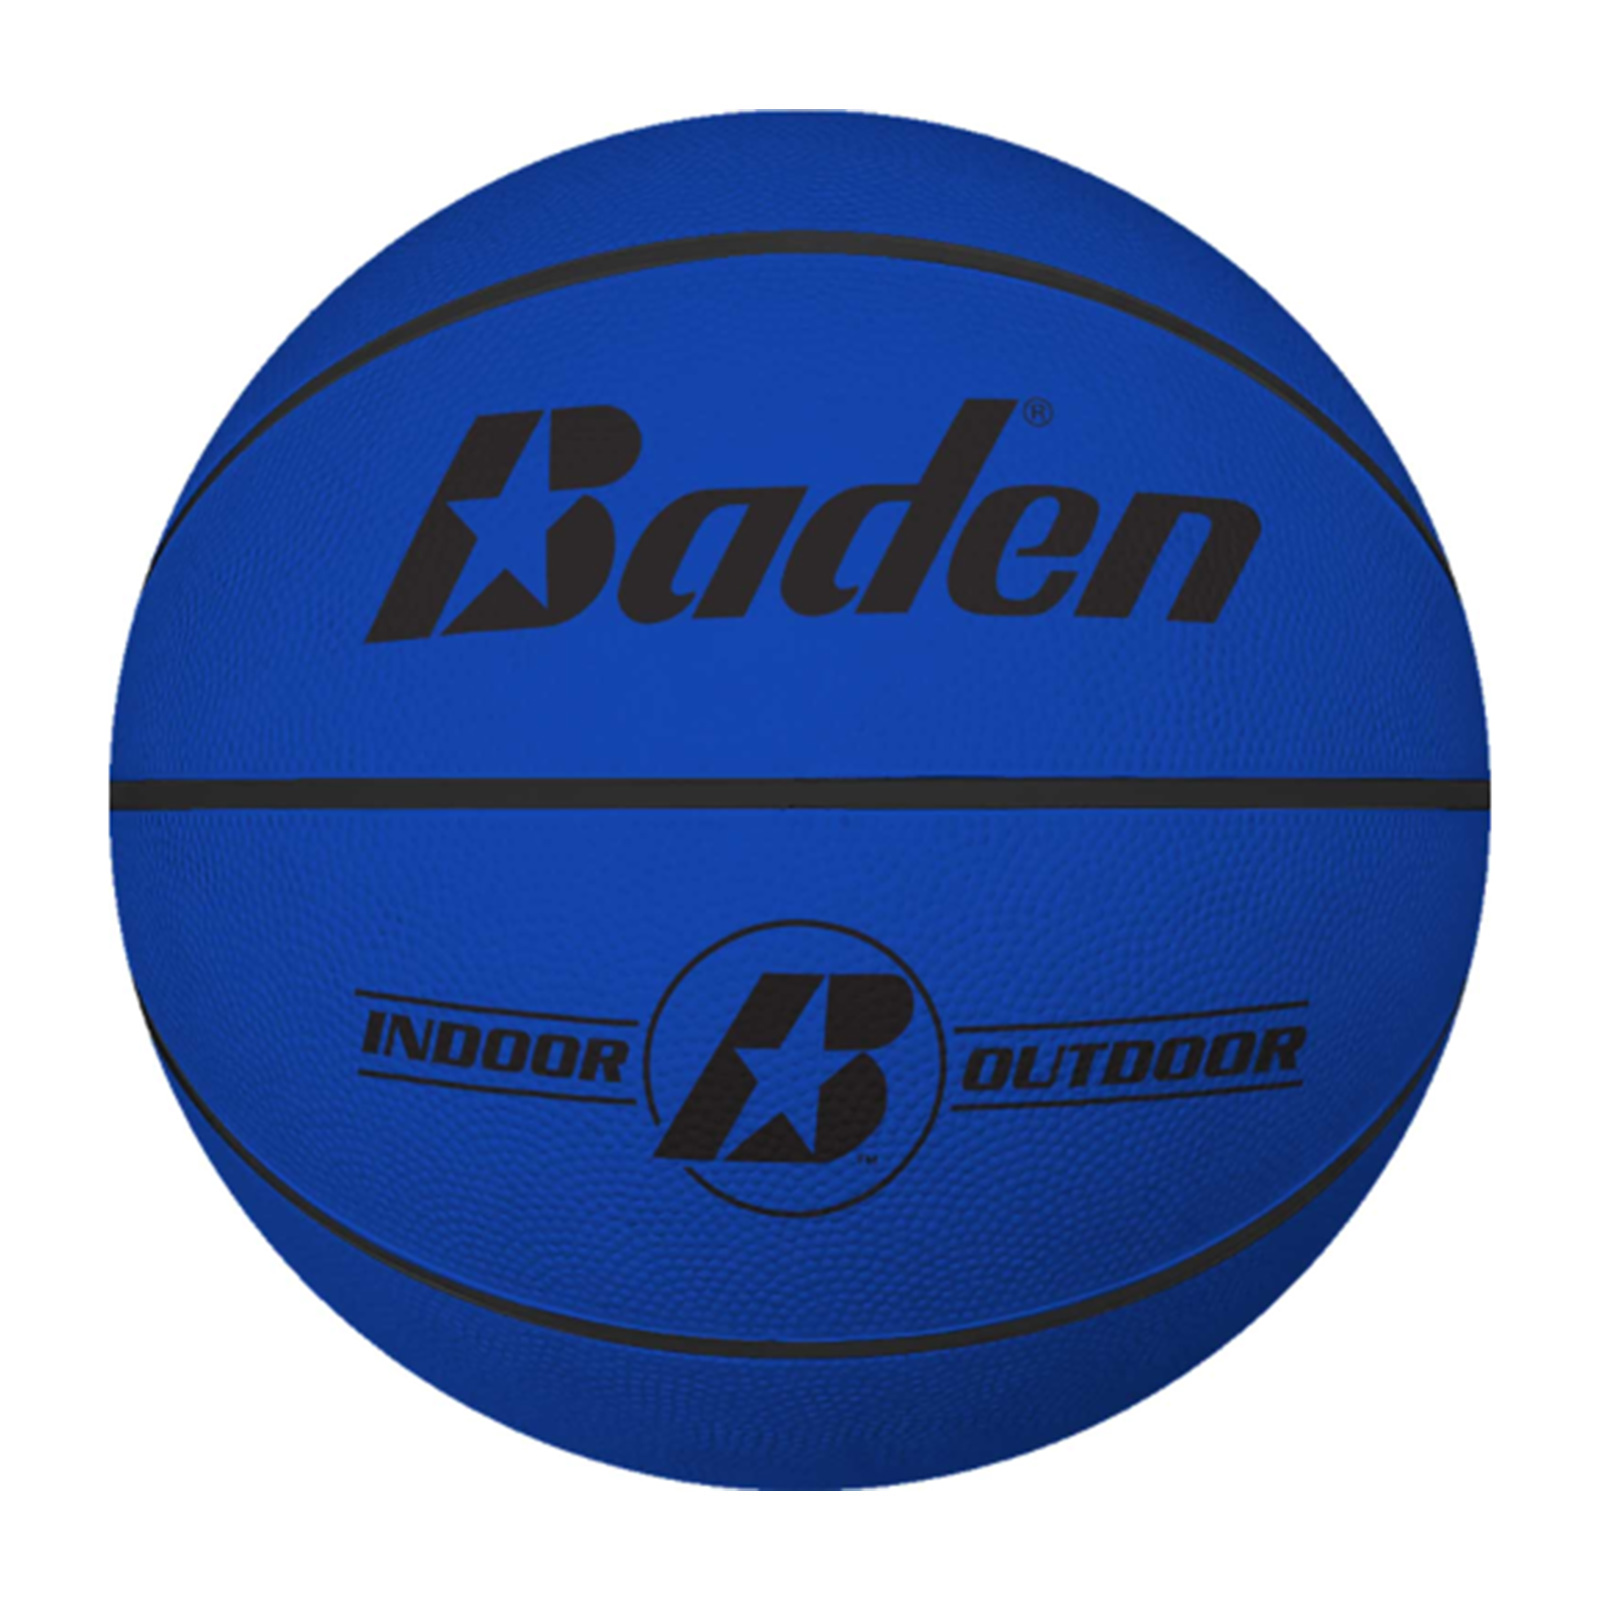 Basketball SG Rubber Coloured Size 6 Blue